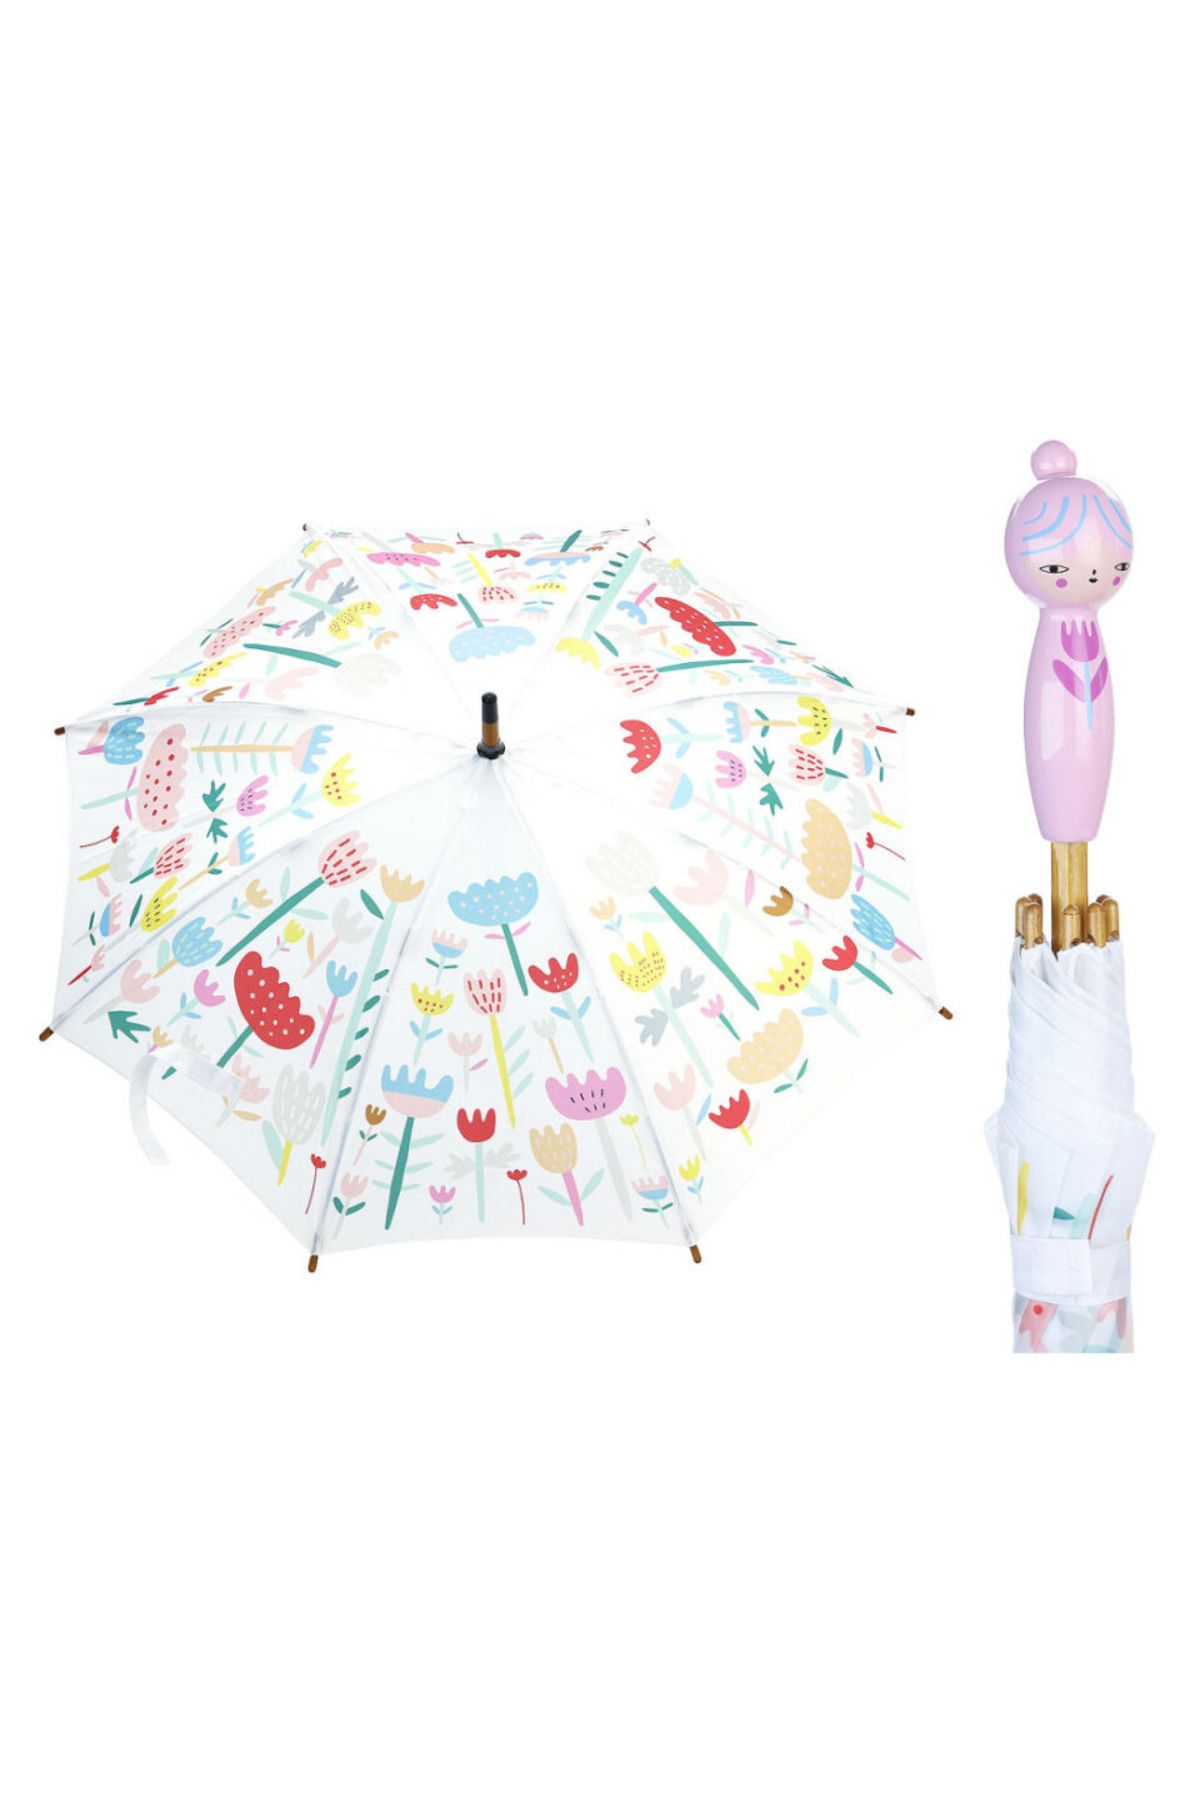 Vilac Flower Pink Umbrella-Çiçekli Pembe Şemsiye